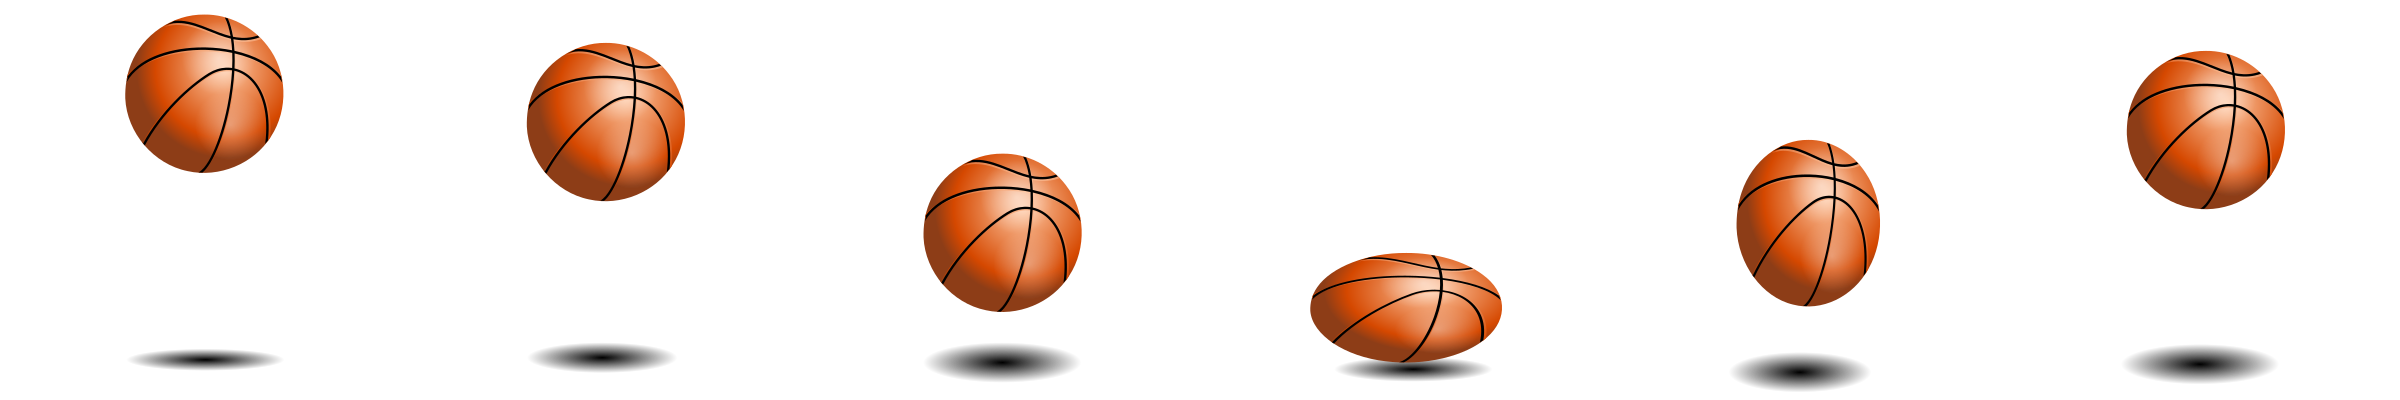 clipart basketball pdf